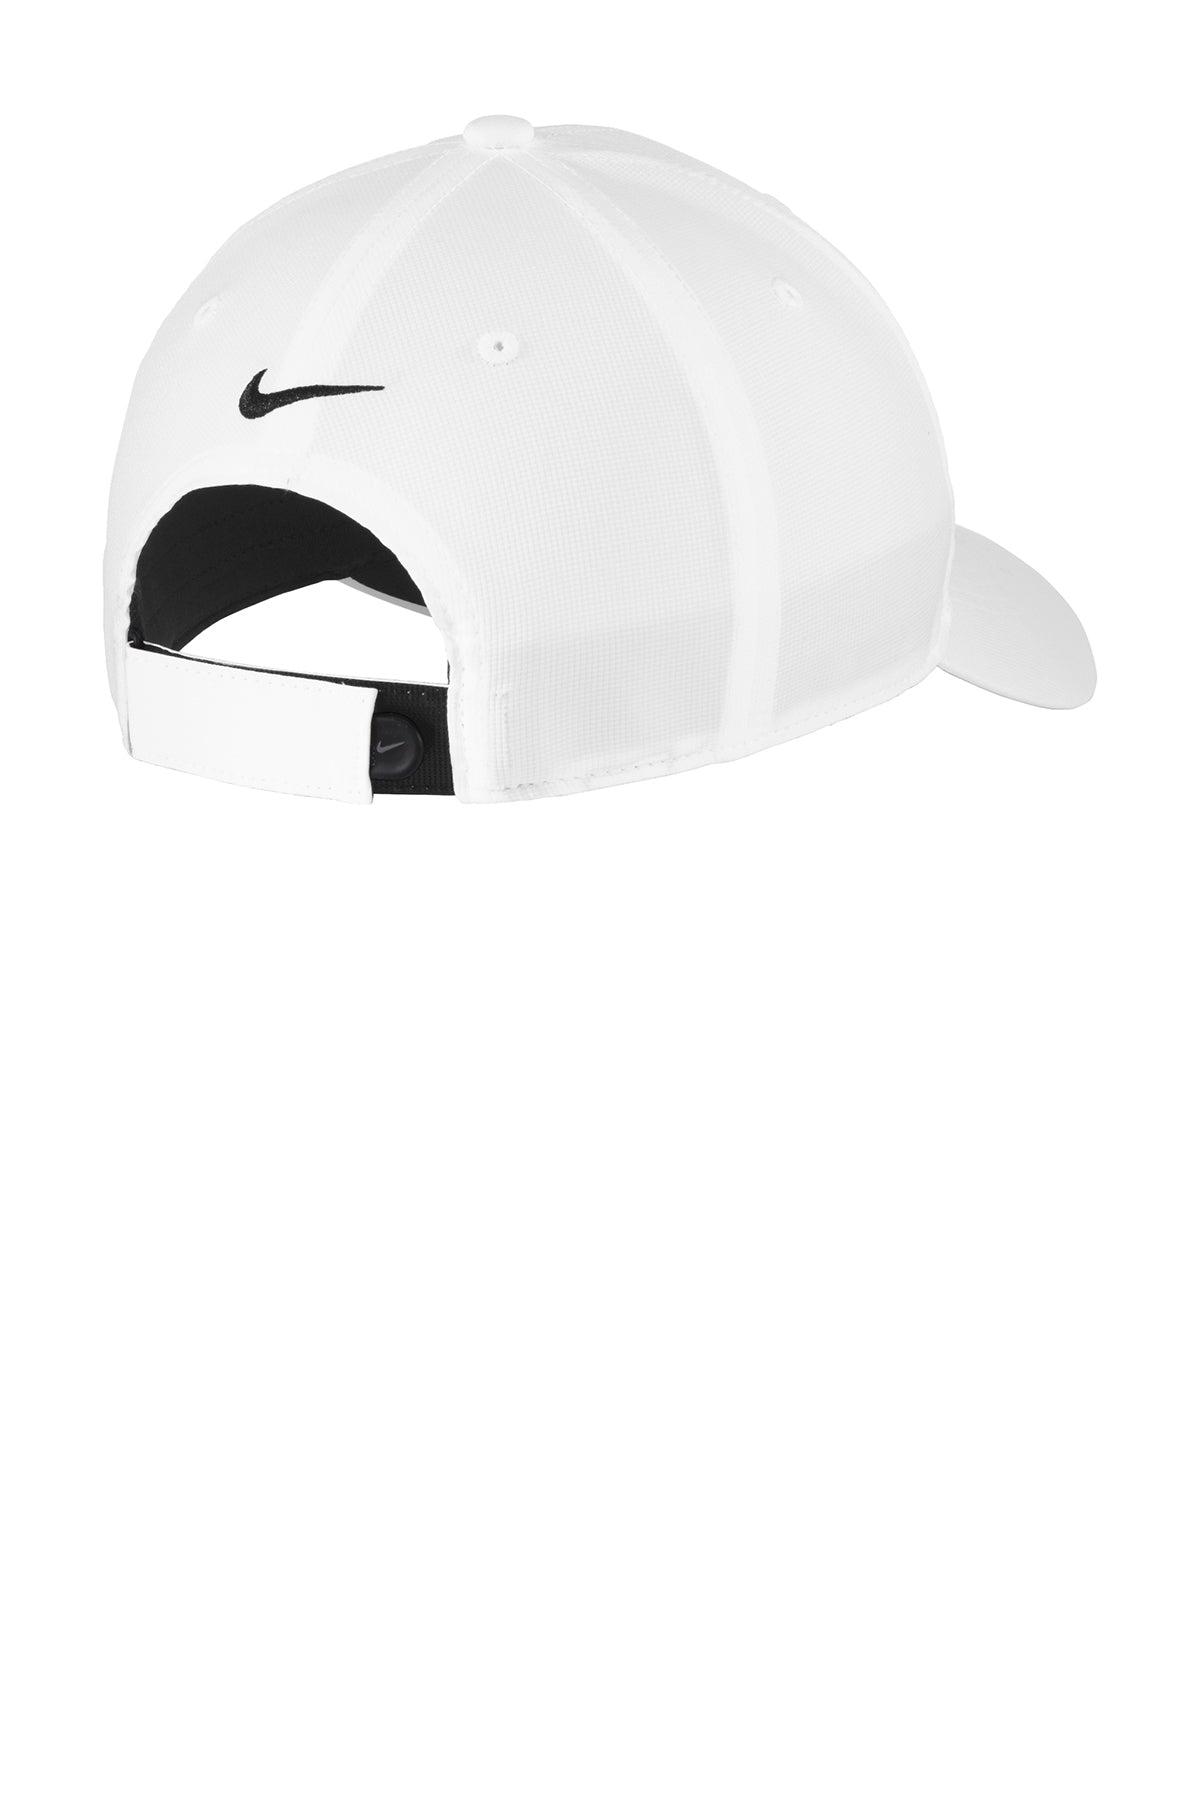 Nike Dri-FIT Tech Custom Caps, White